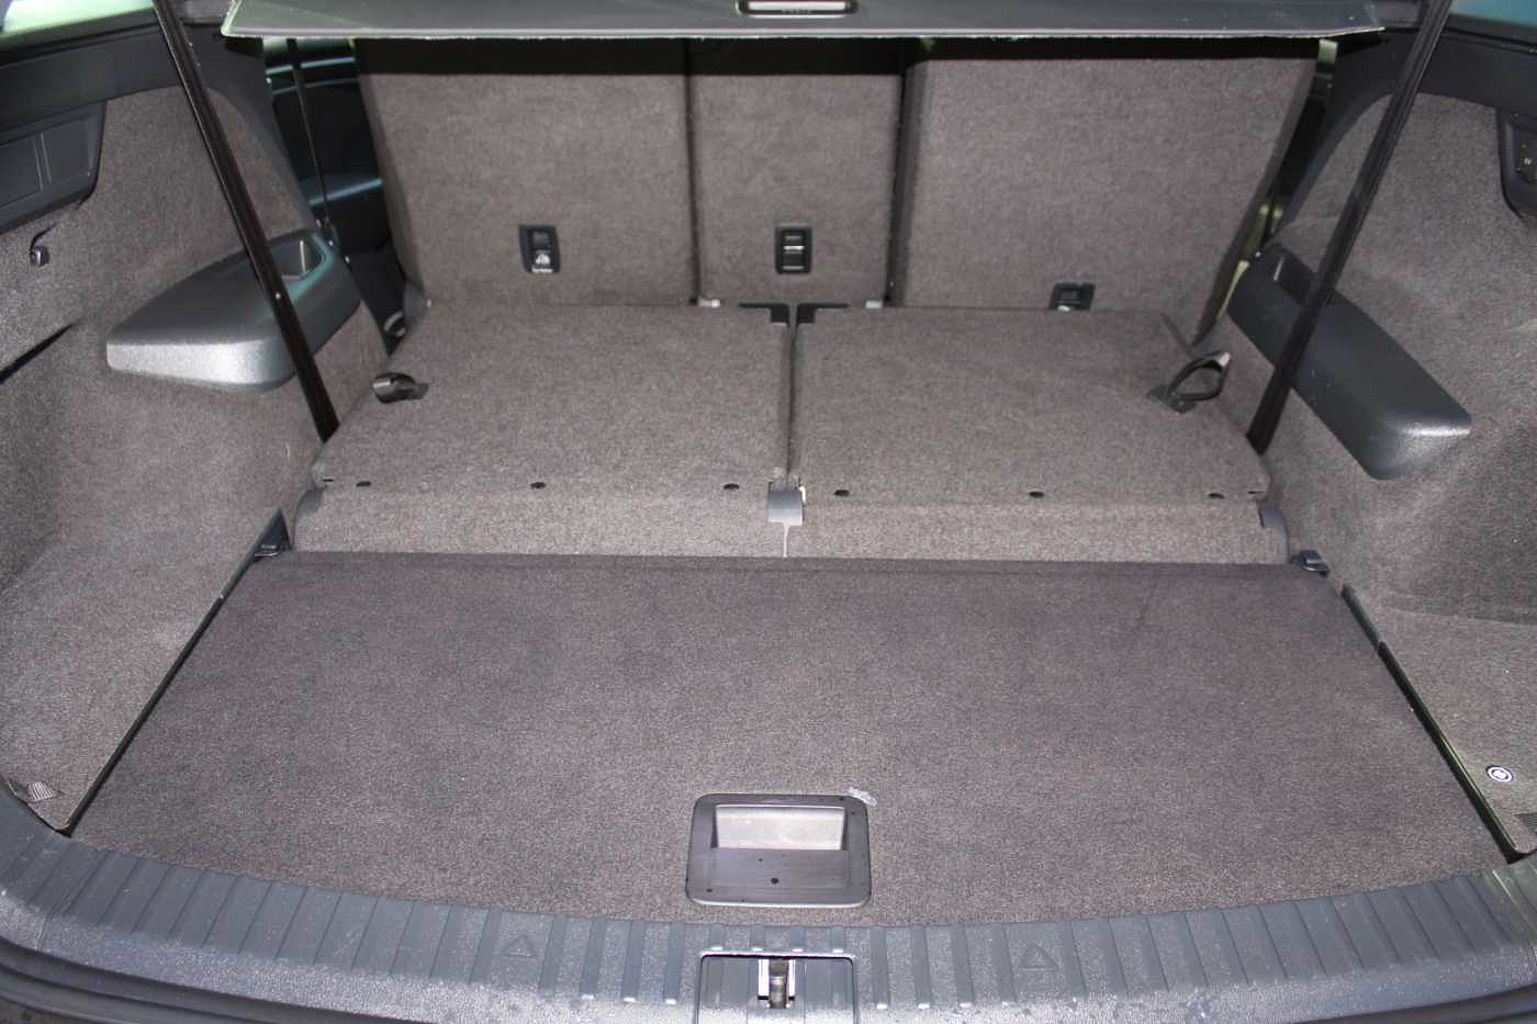 SKODA Kodiaq 2.0 TDI (150ps) SE Technology (7 Seats) Auto/DSG SUV